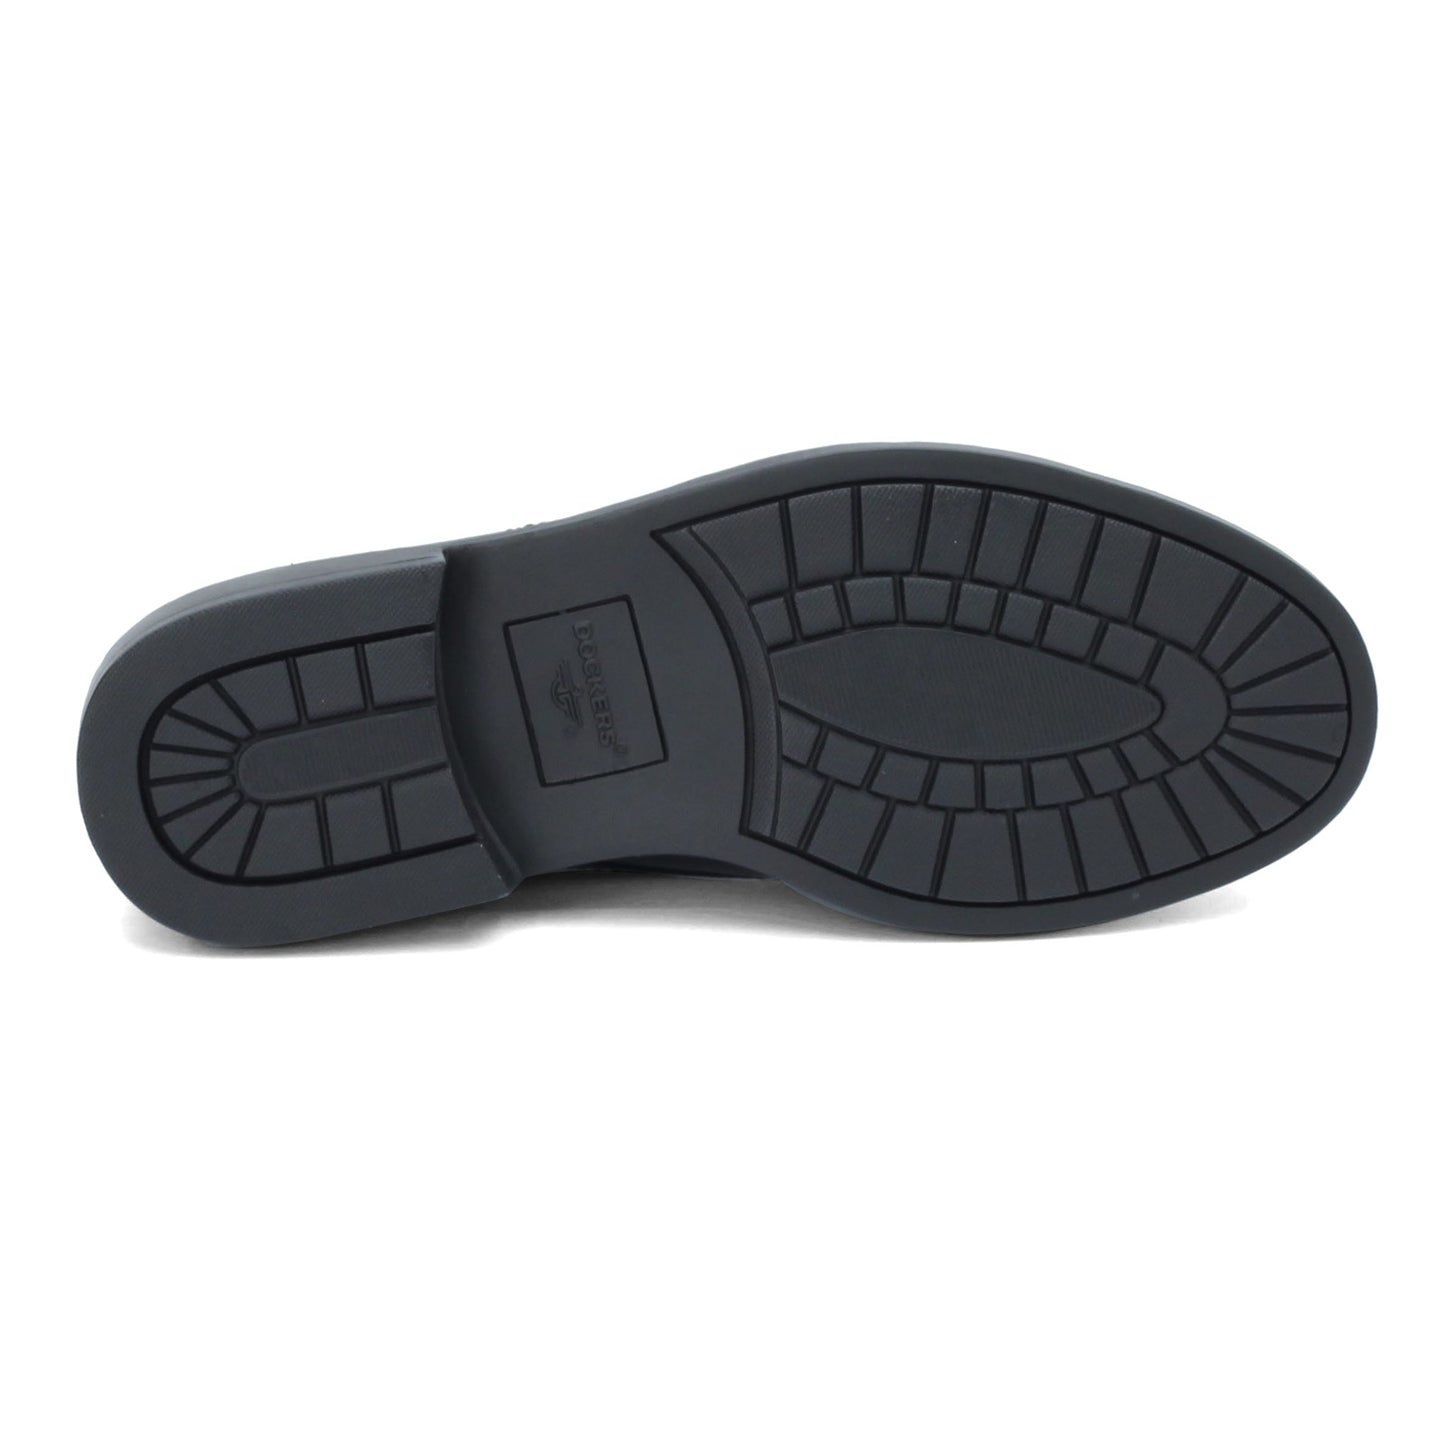 Peltz Shoes  Men's Dockers Gordon Oxford BLACK 90-2214